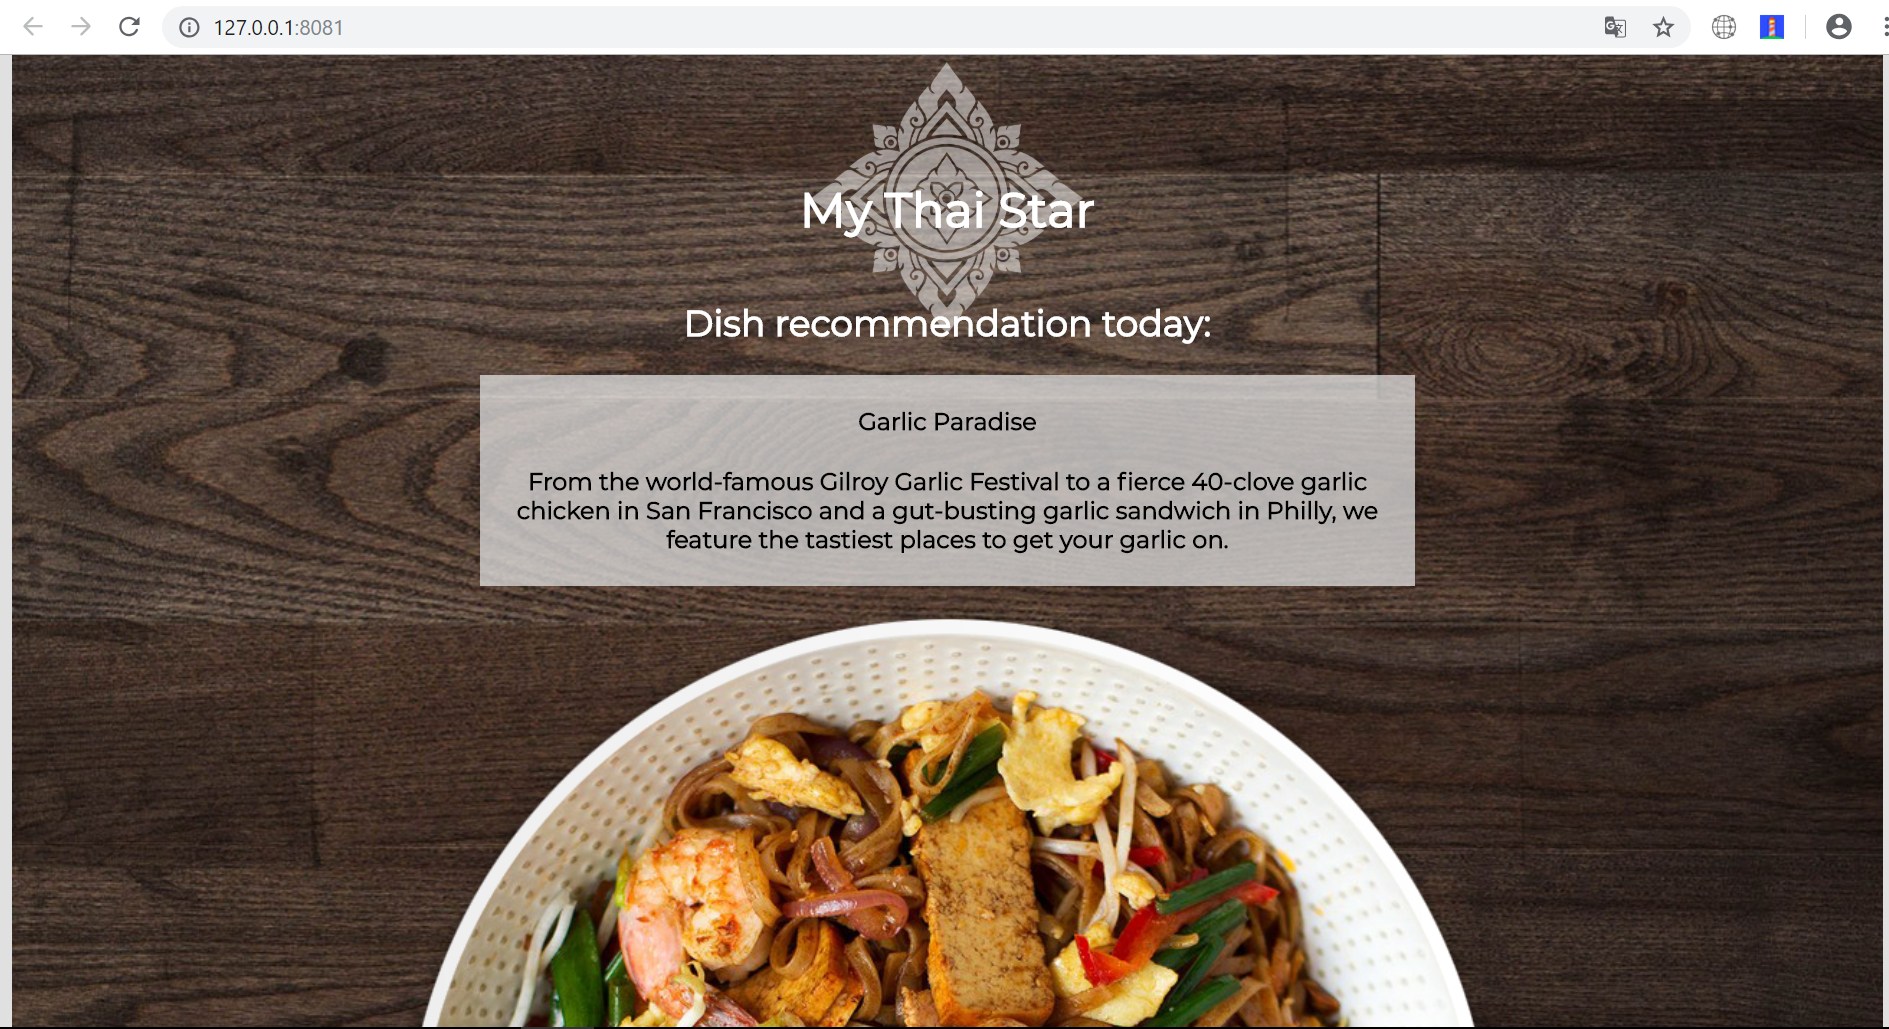 My Thai Star recommendation